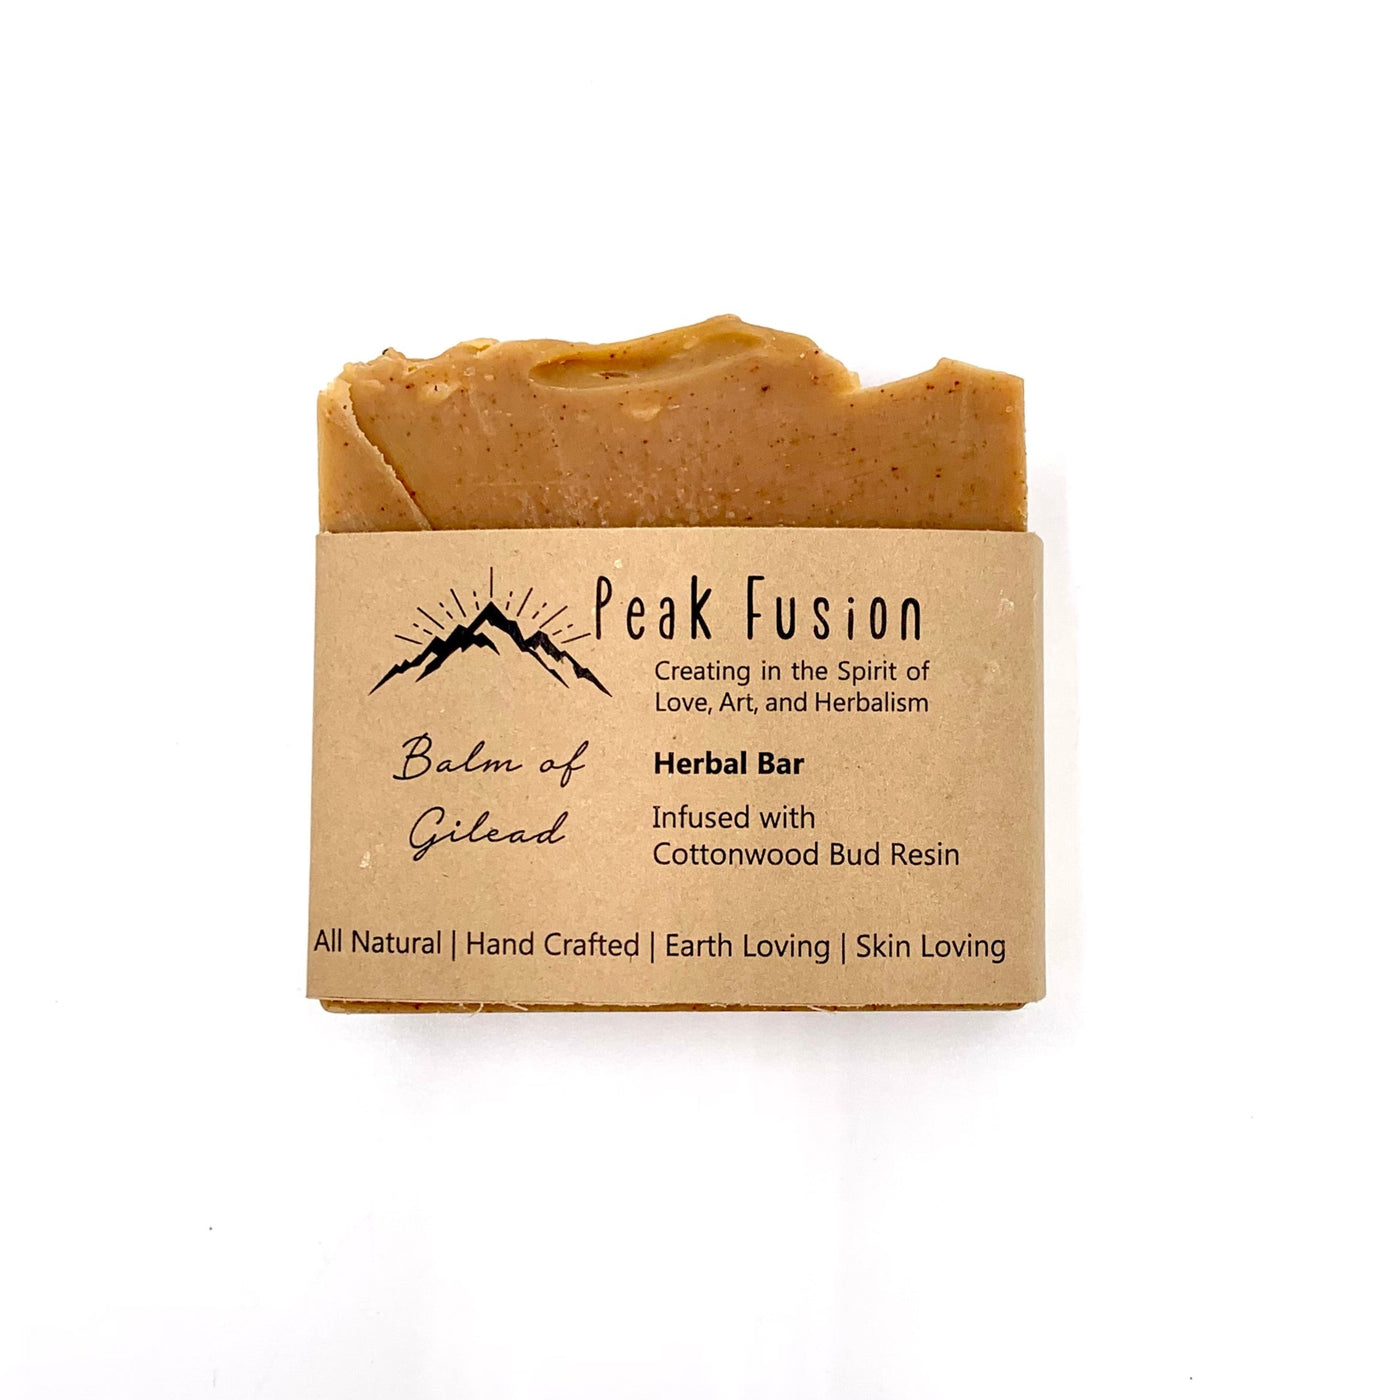 Peak Fusion Balm of Gilead Soap